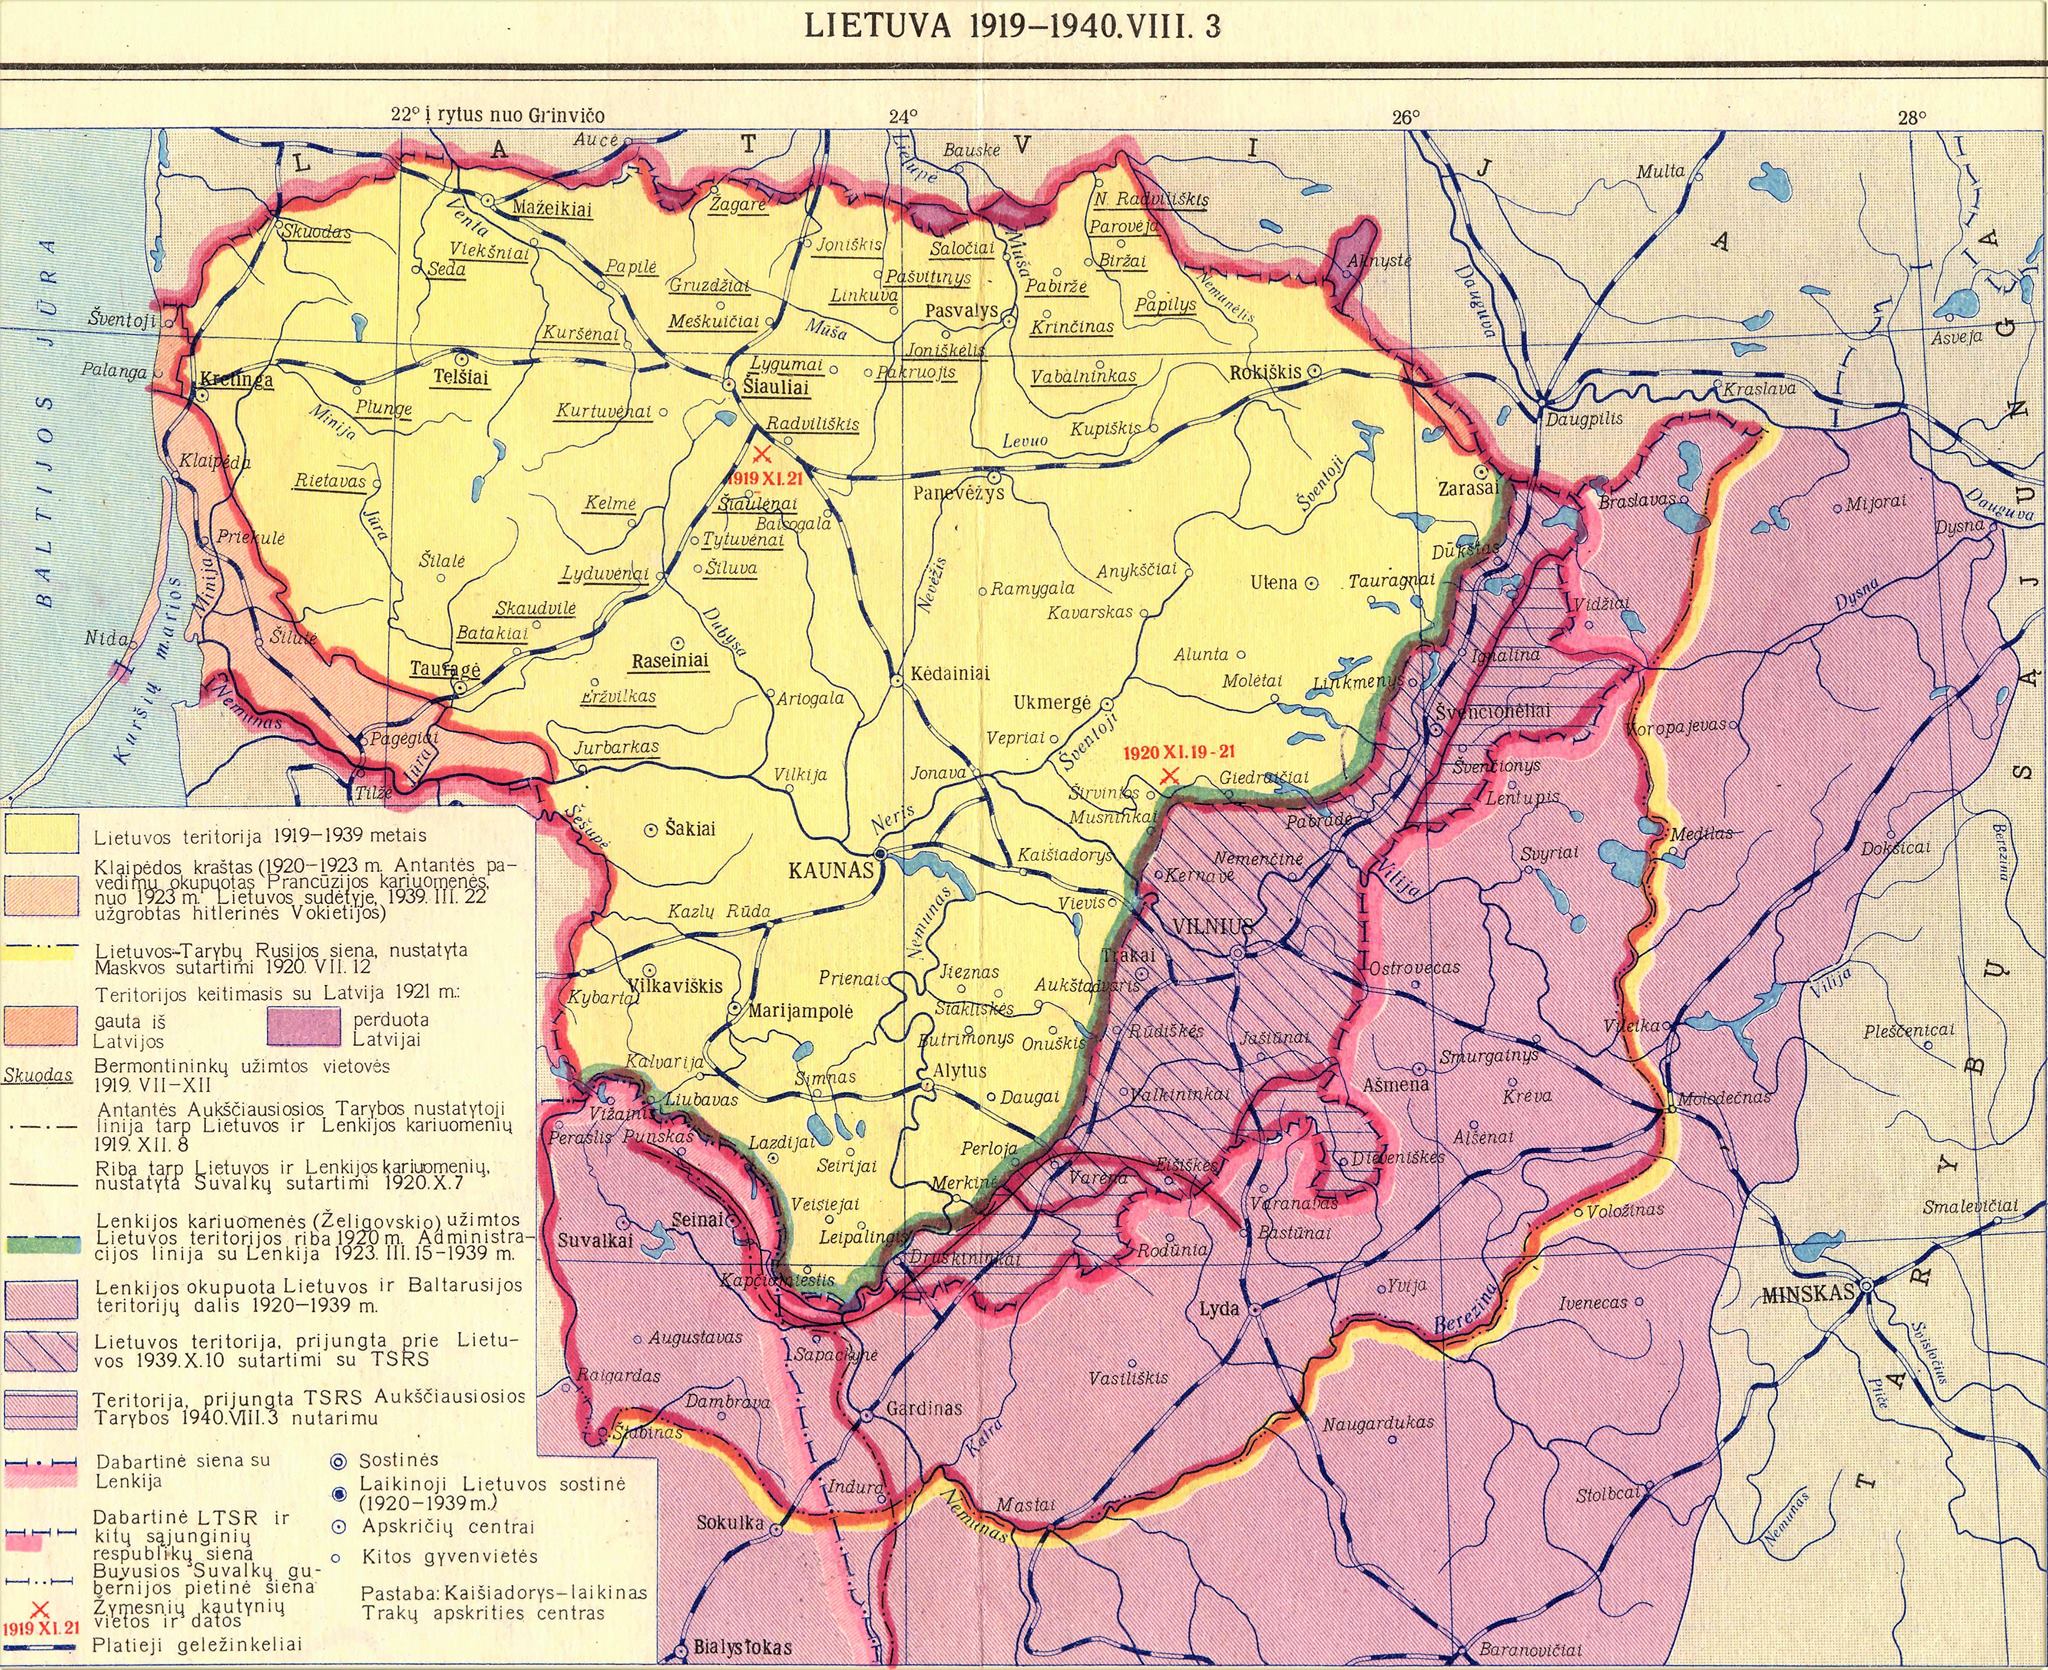 Lietuva 1919-1940.VIII.3.jpg